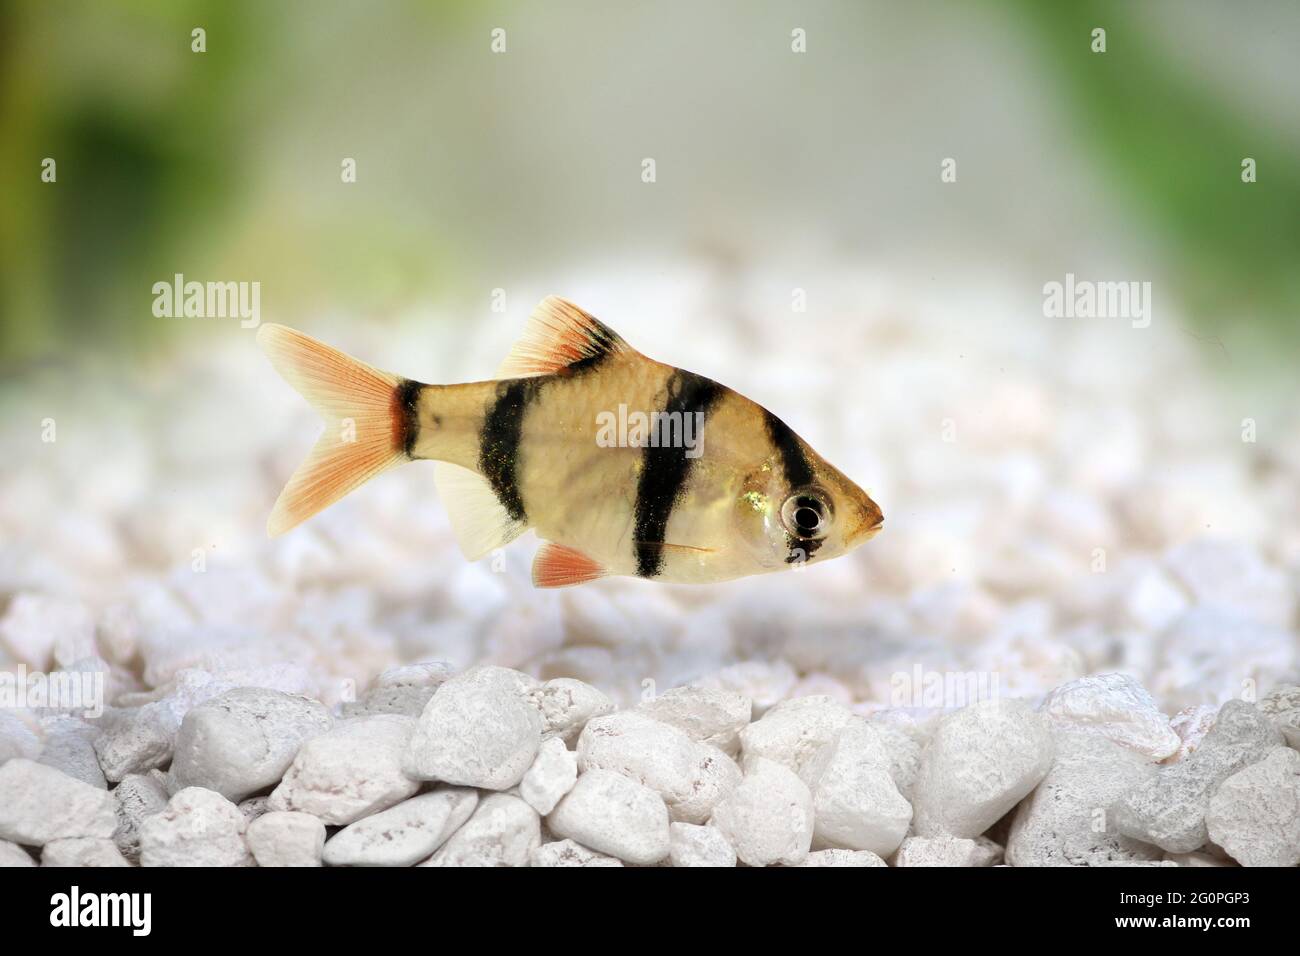 Tiger barb or Sumatra barb Puntius tetrazona tropical aquarium fish Stock Photo